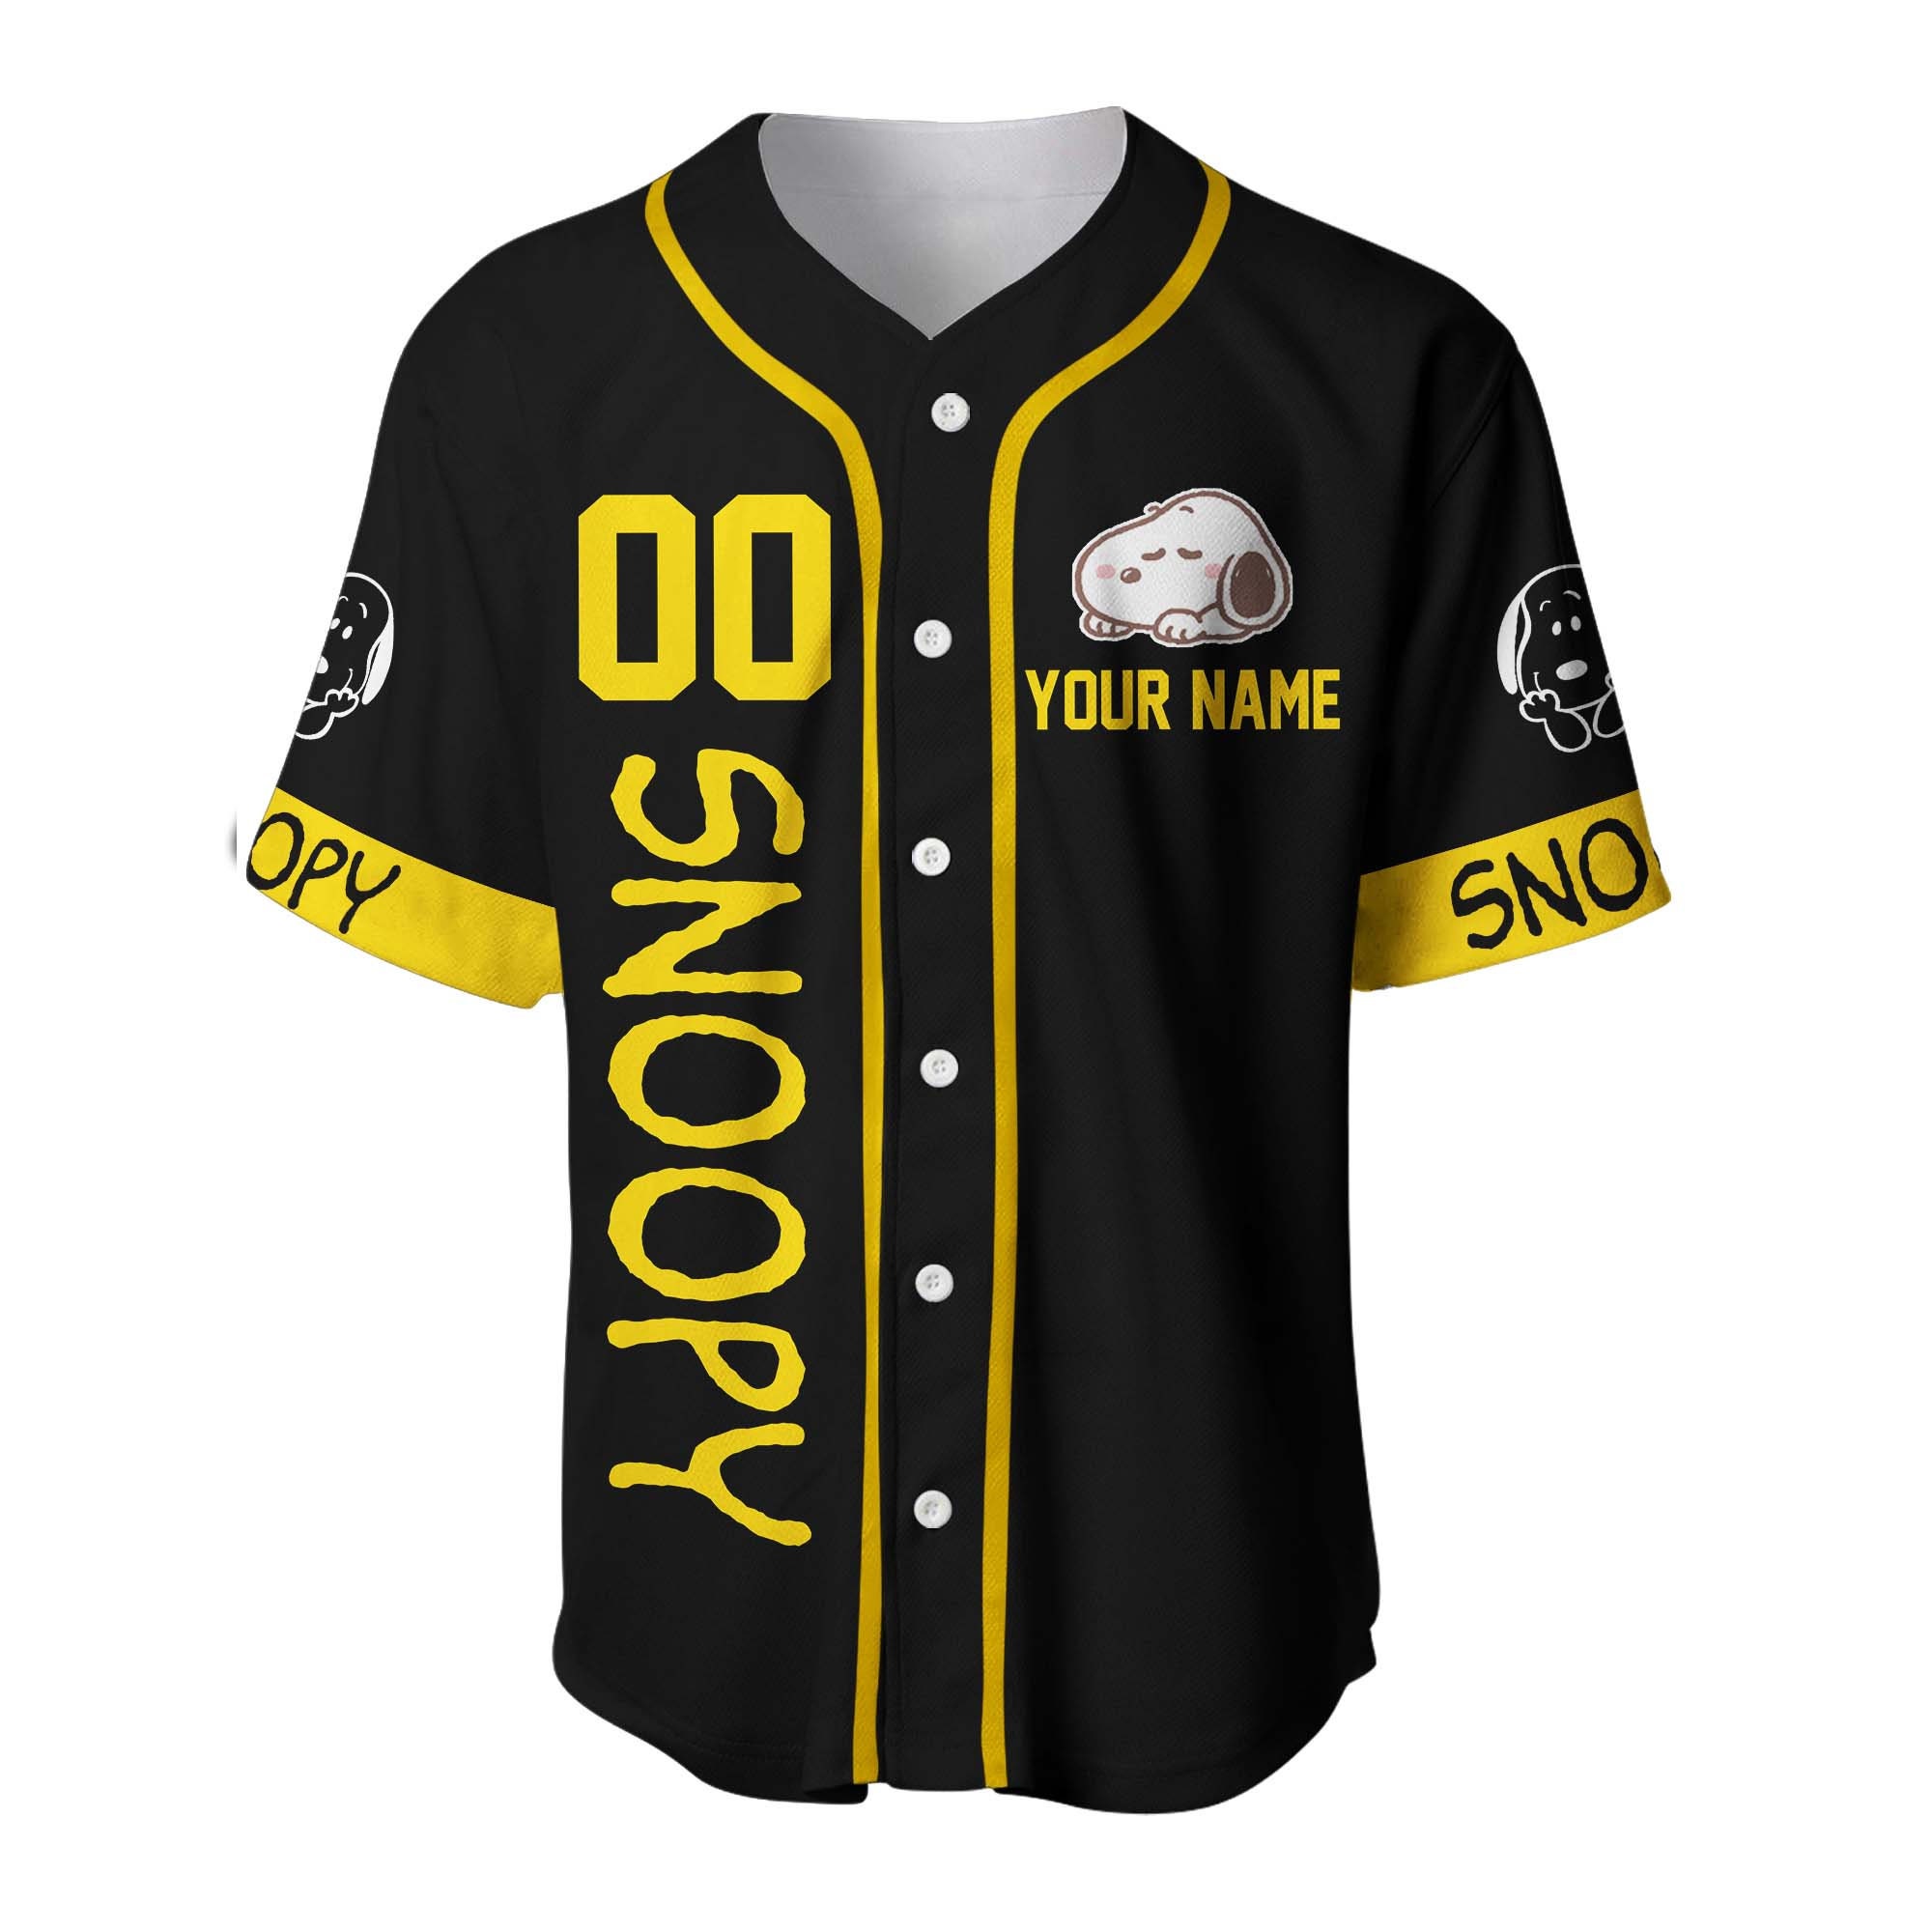 Chicago Cubs Peanuts Snoopy BL Baseball Jersey Shirt Custom Number And Name  - Banantees